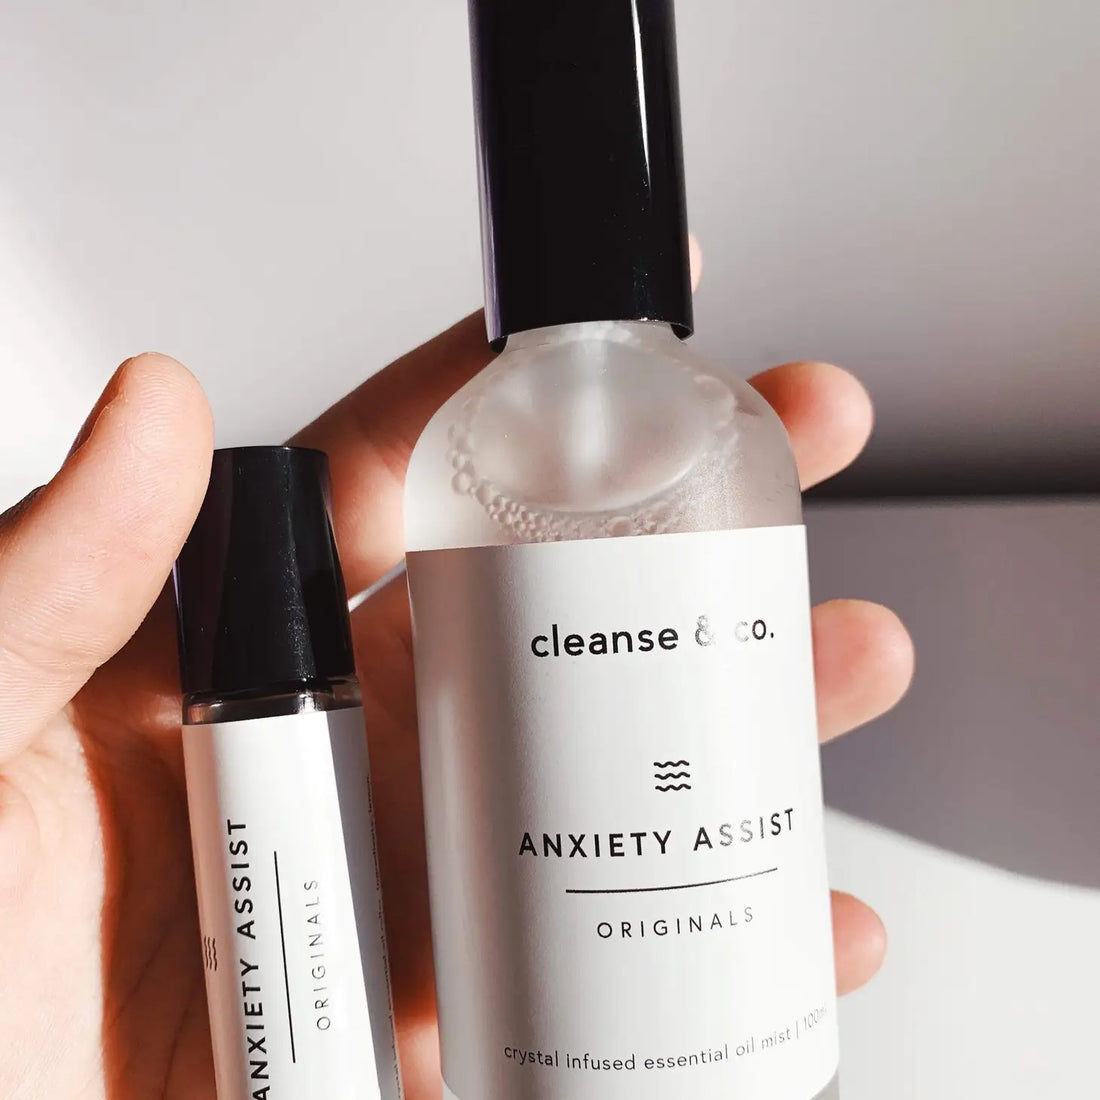 Anxiety Assist – Originals Essential Oil Blend